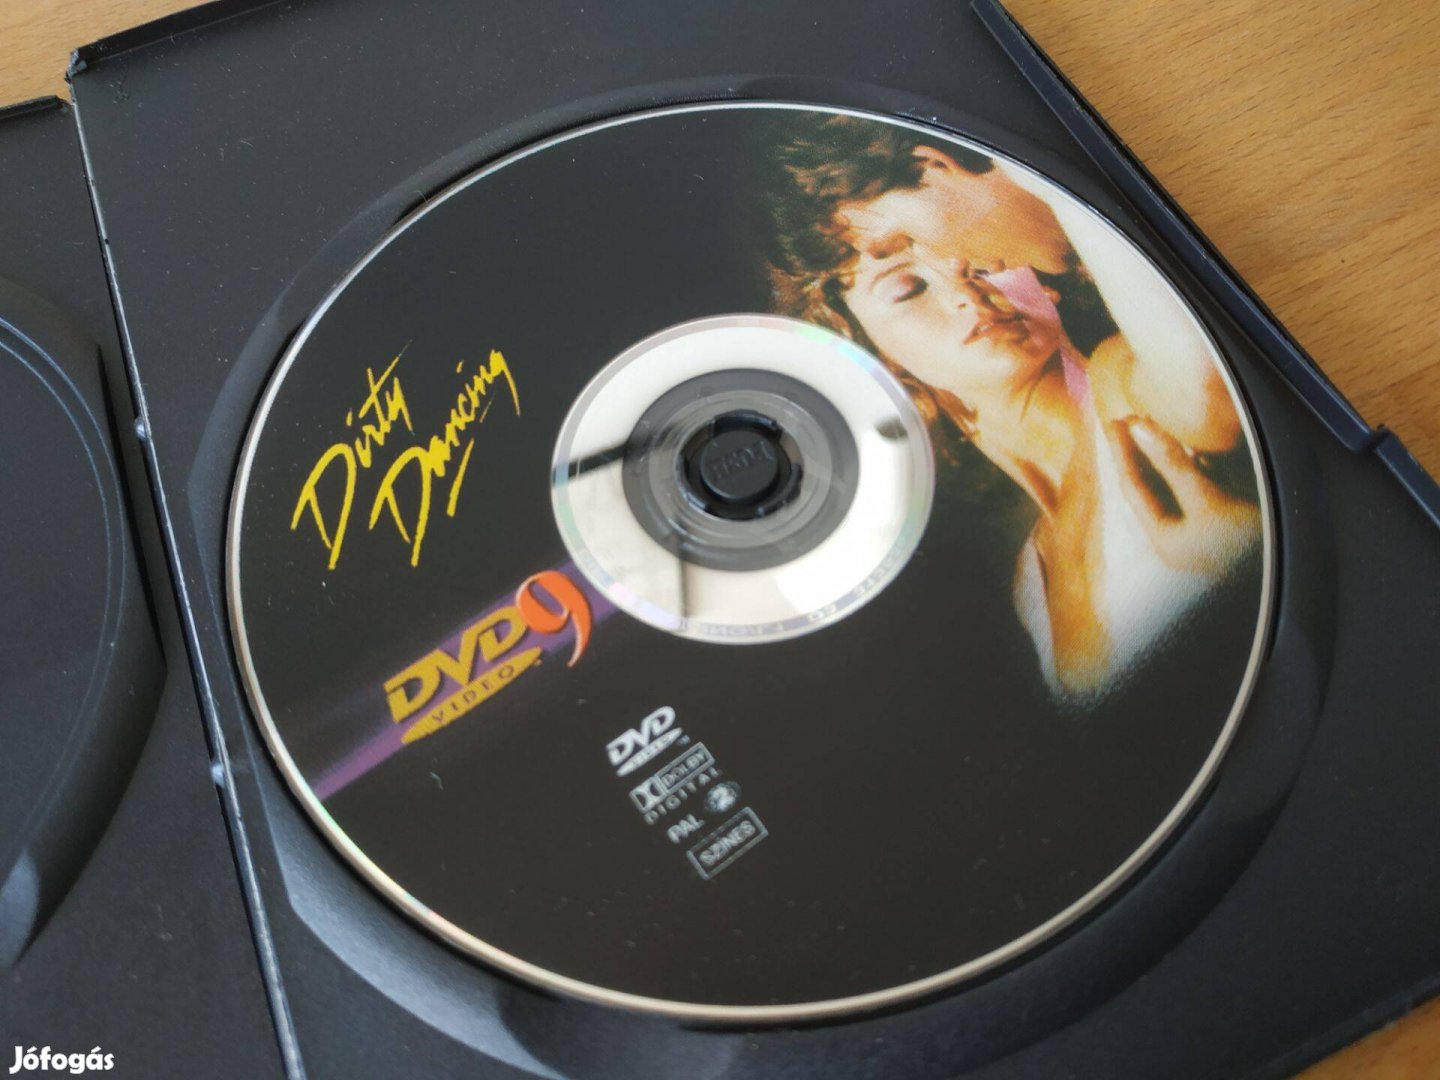 Dirty dancing - Piszkos Tánc (amerikai romantikus dráma,100p,'87) DVD